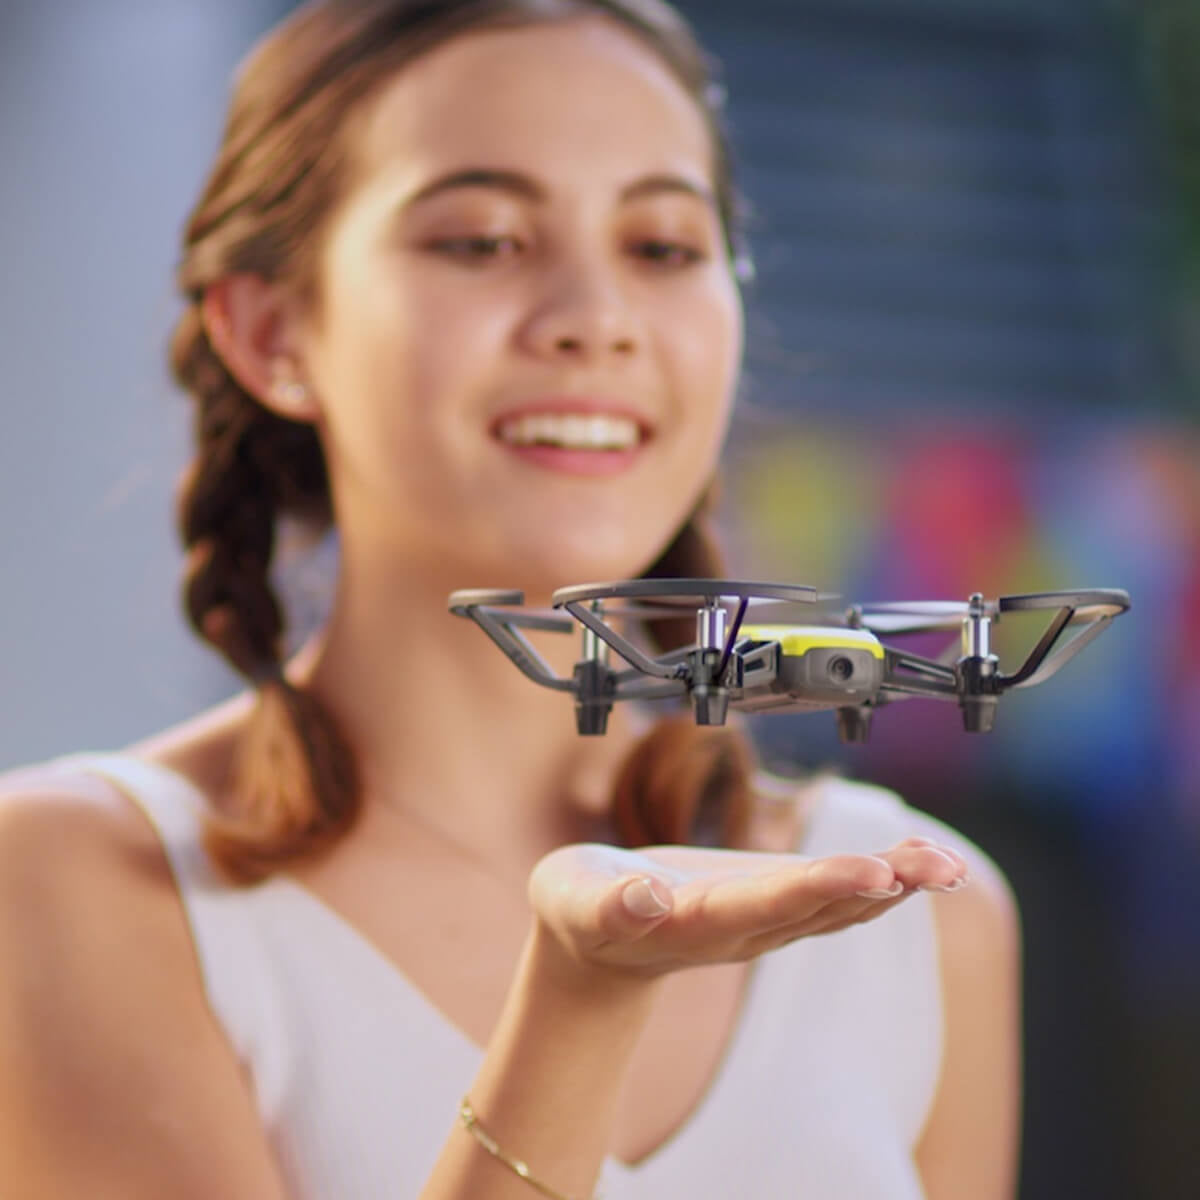 Tello Boost Combo-Drohne, angetrieben von DJI